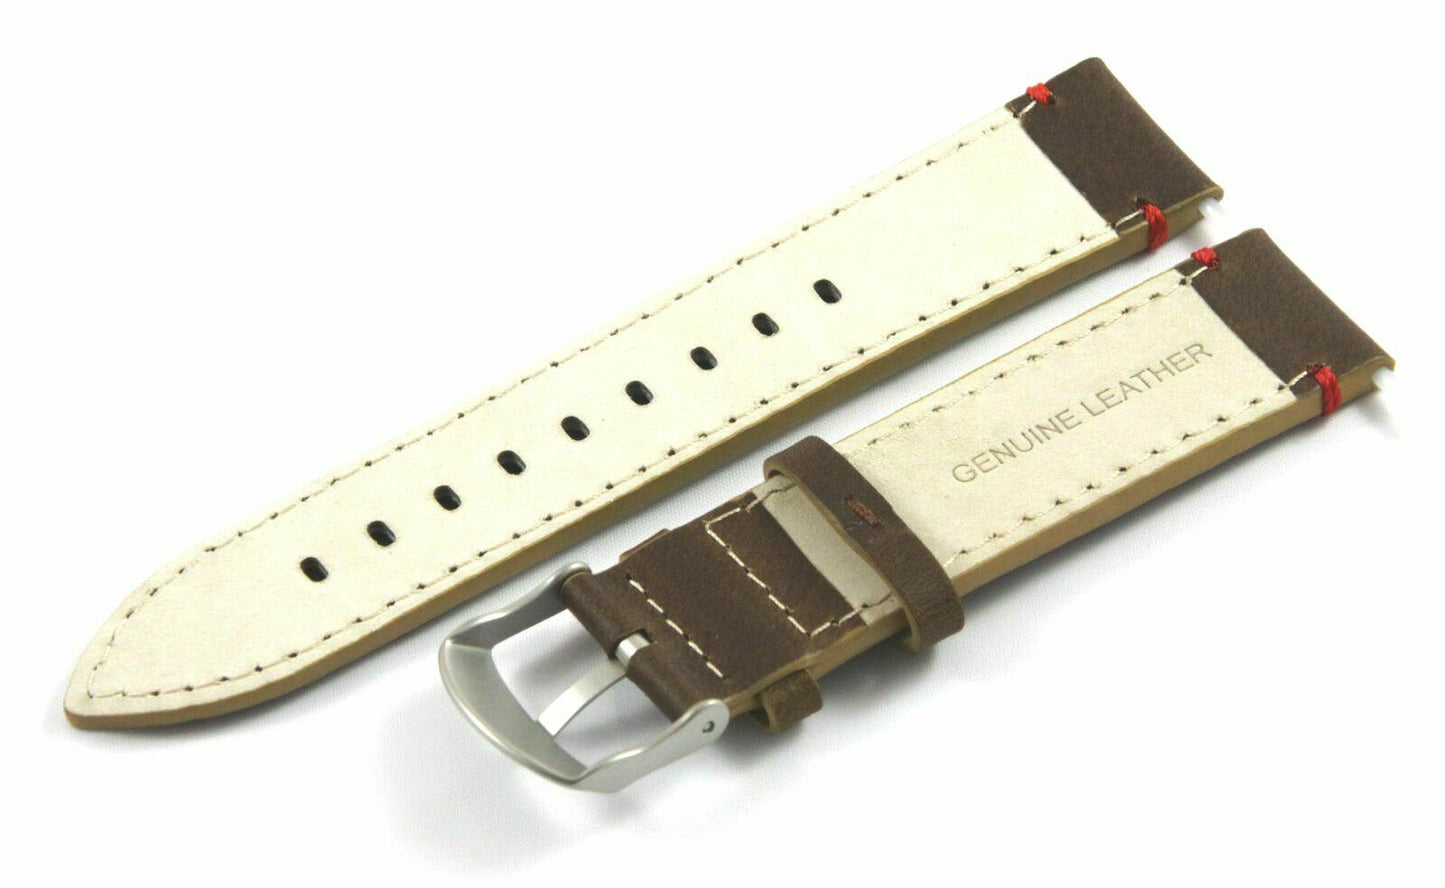 Timex Ersatzarmband TW4B04300 Expedition Scout Ersatzband - 20mm multifit Leder